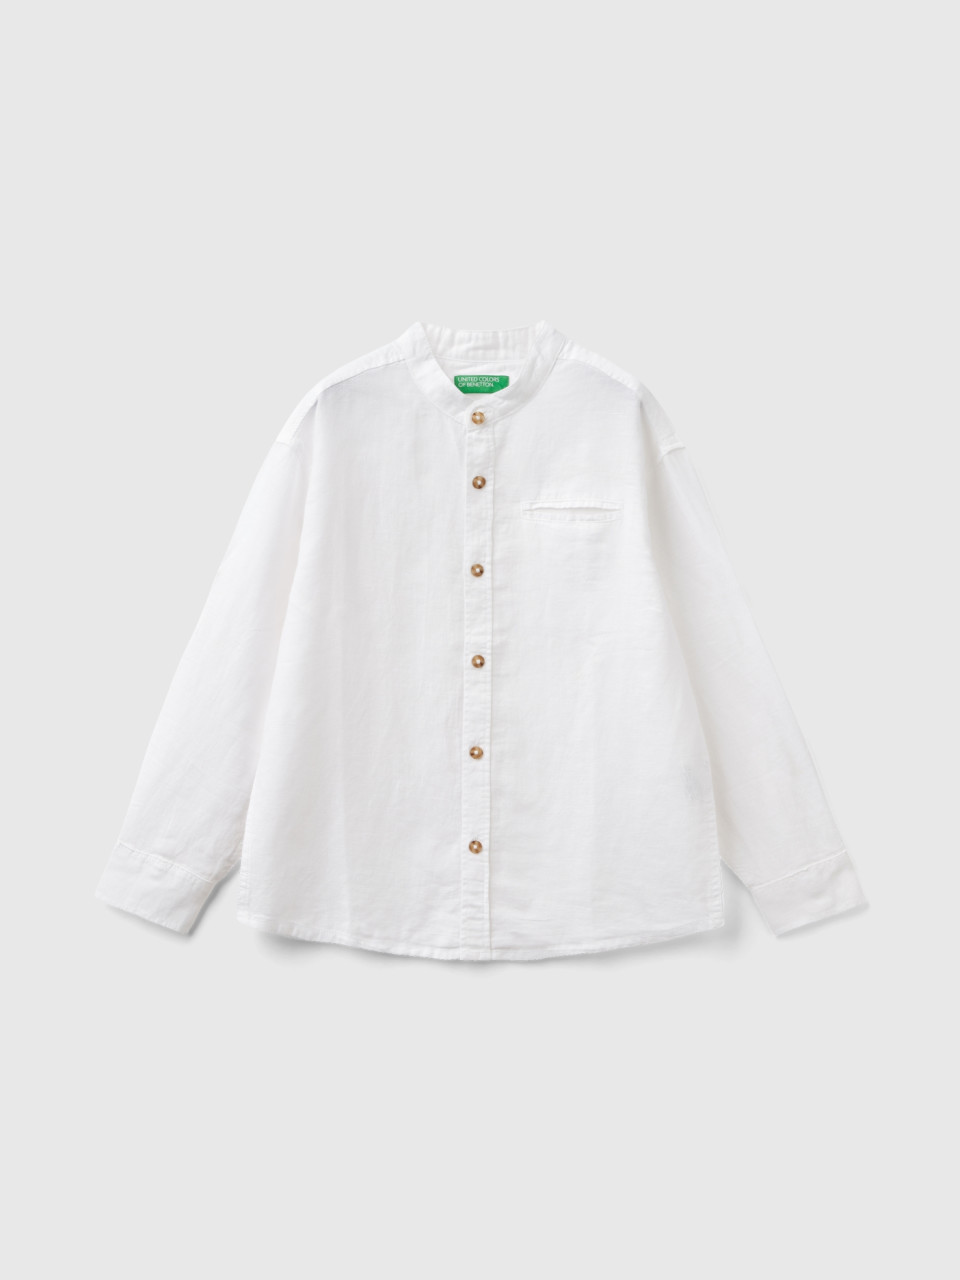 Benetton, Mandarin Collar Shirt In Linen Blend, White, Kids